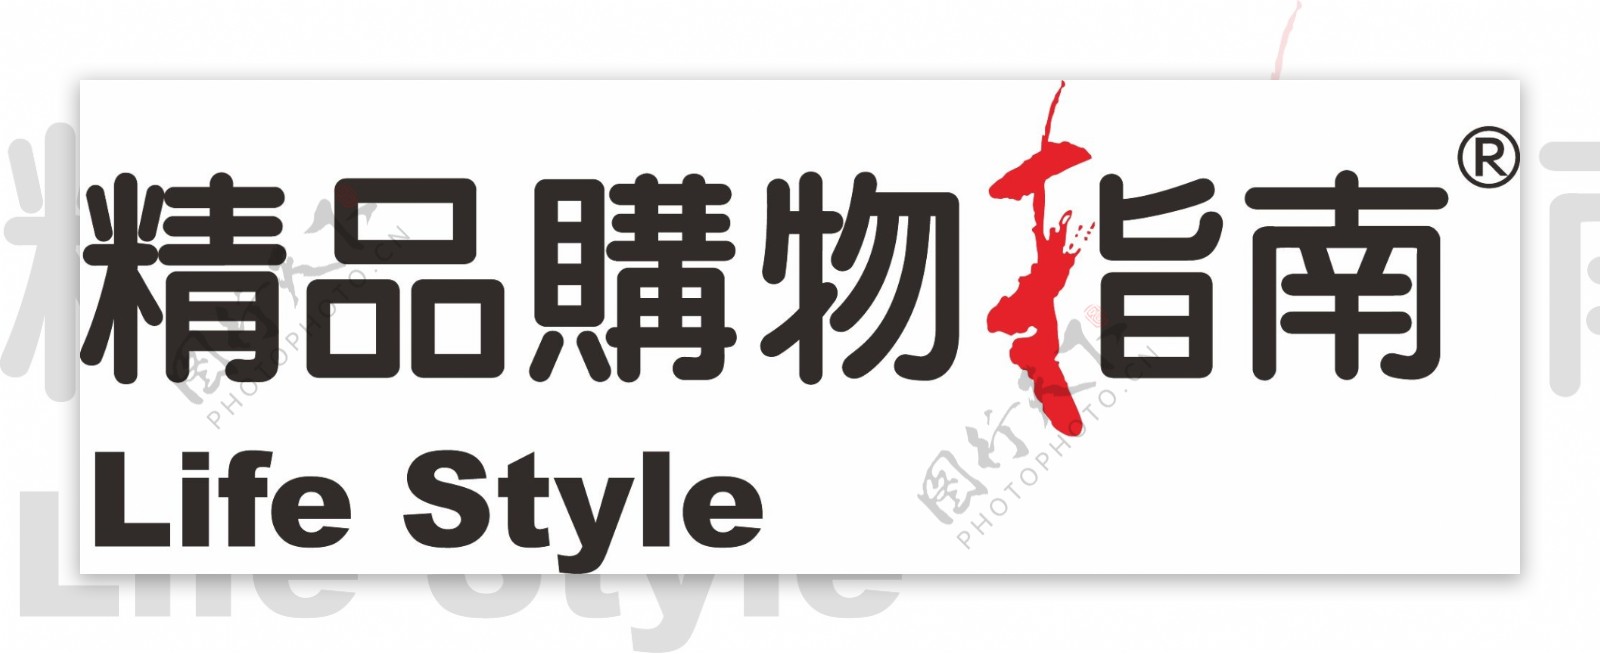 精品购物指南logo